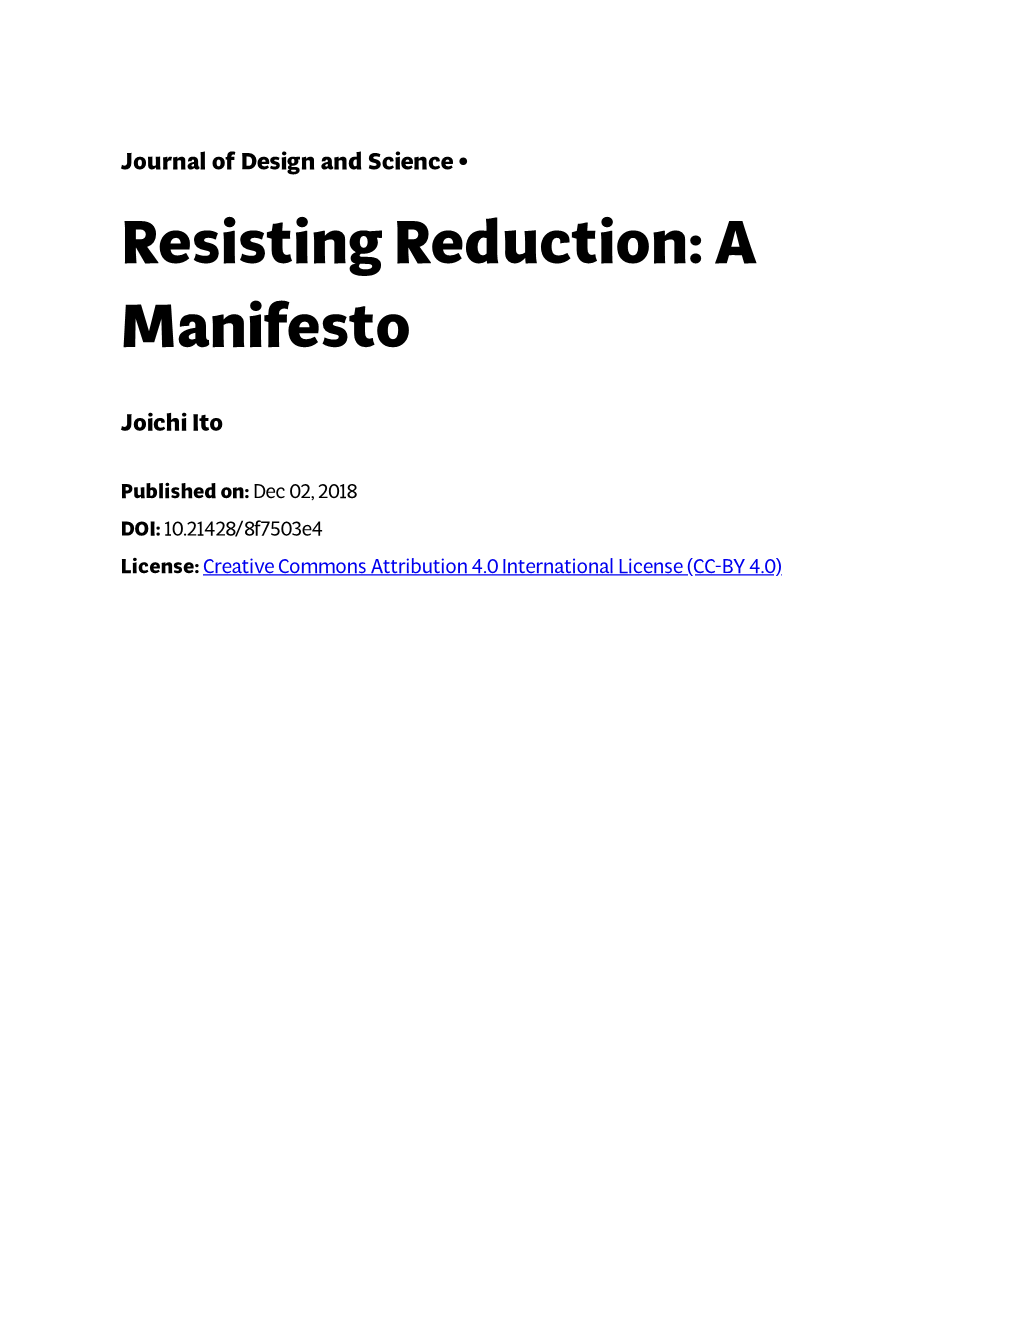 Resisting Reduction: a Manifesto